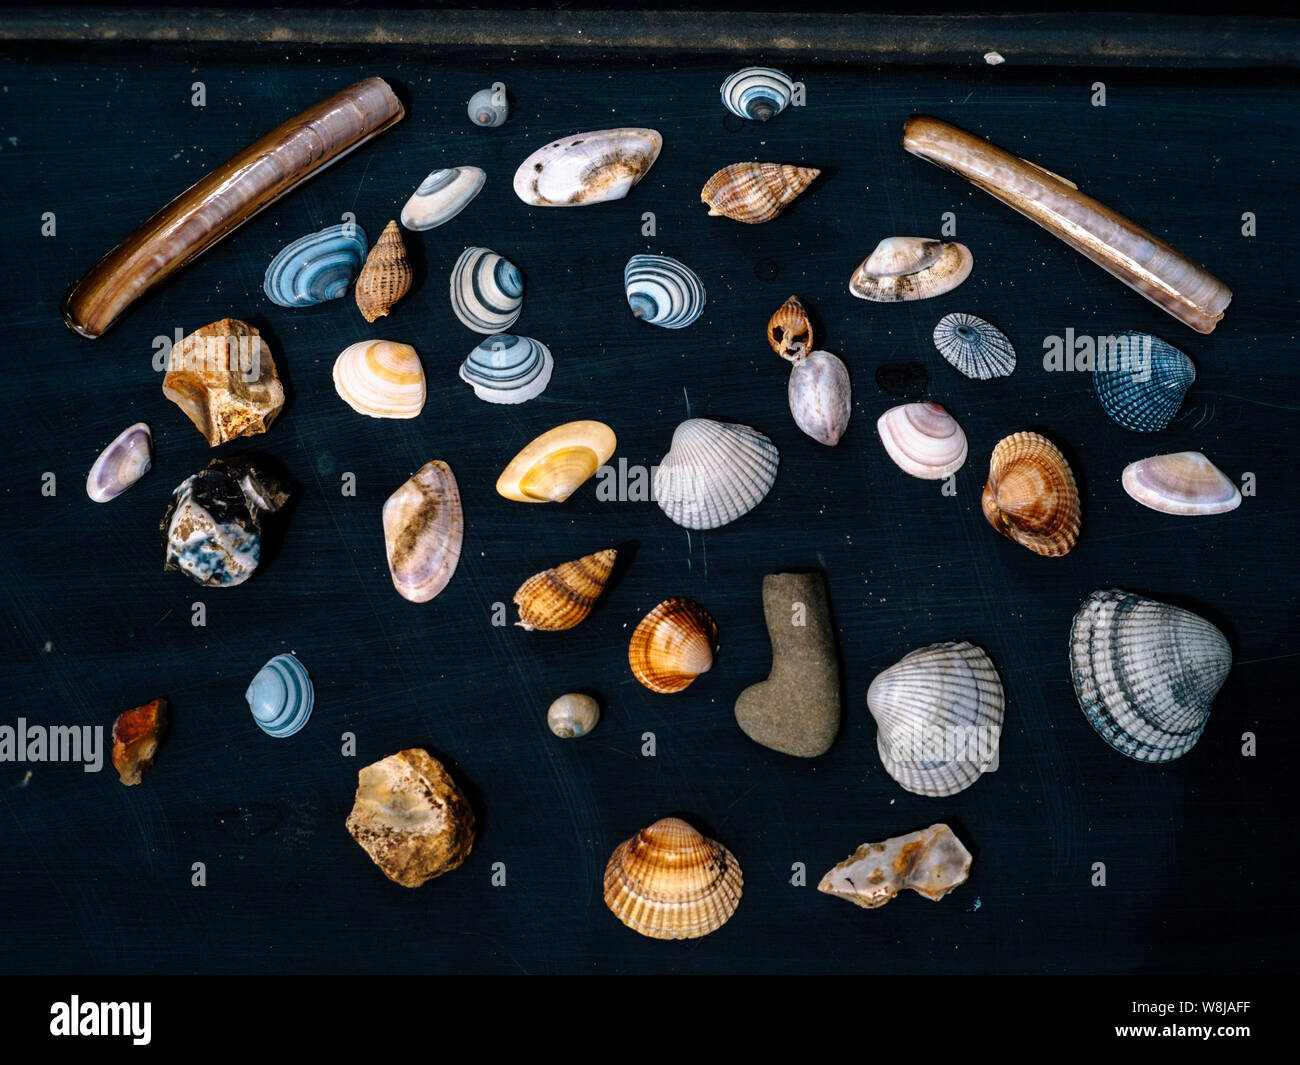 Collection of seashells Stock Photo